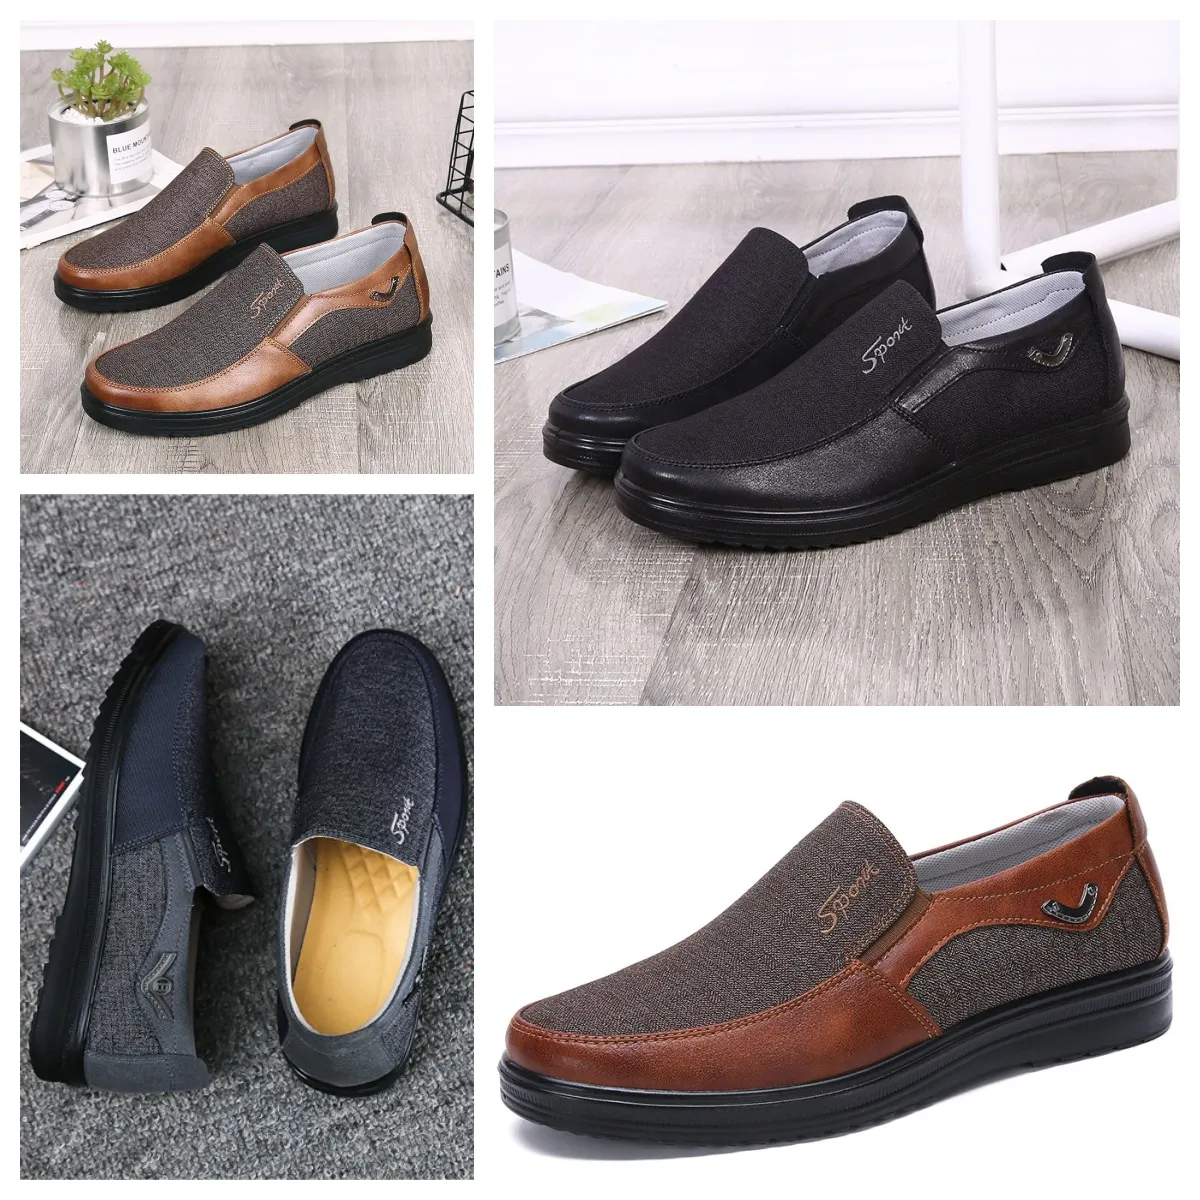 Shoes GAI sneaker sport Cloth Shoe Men Single Business Low Top Shoe Casual Soft Sole Slippers Flat Men Shoe Black whites comforts soft big size 38-50